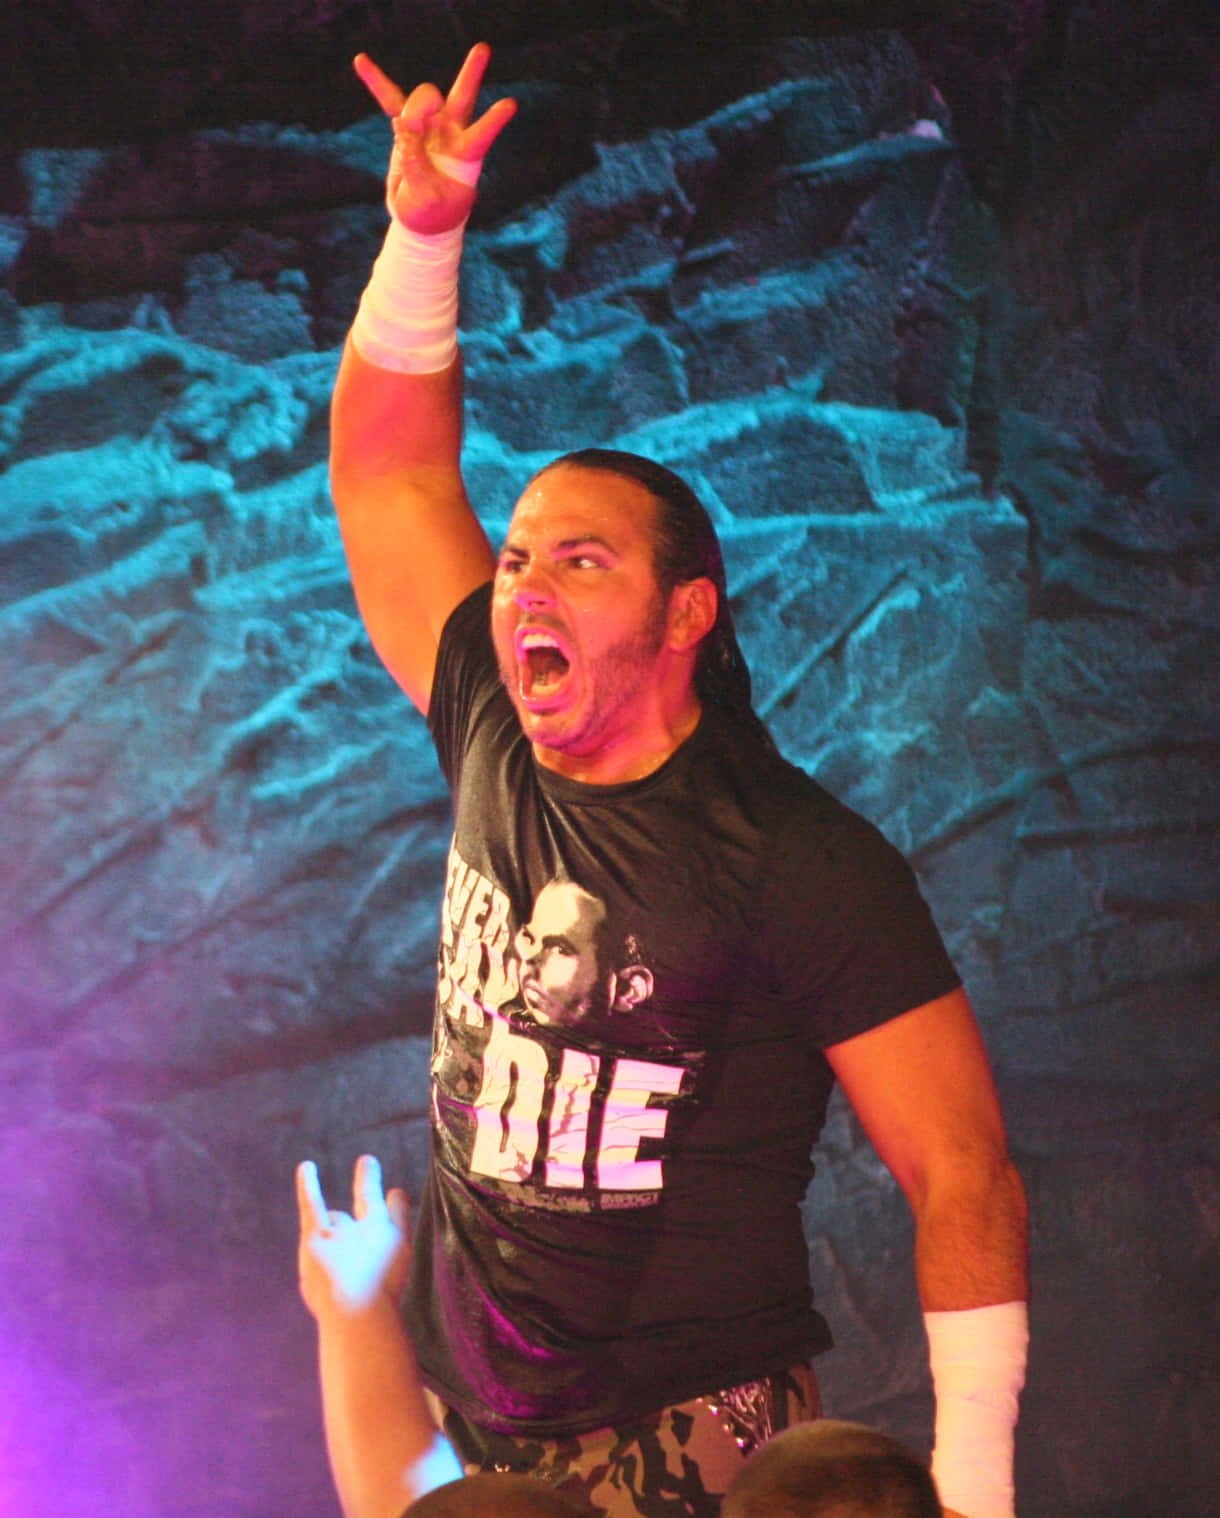 American Professional Wrestler Matt Hardy At Tna Show, 2014 Wallpaper